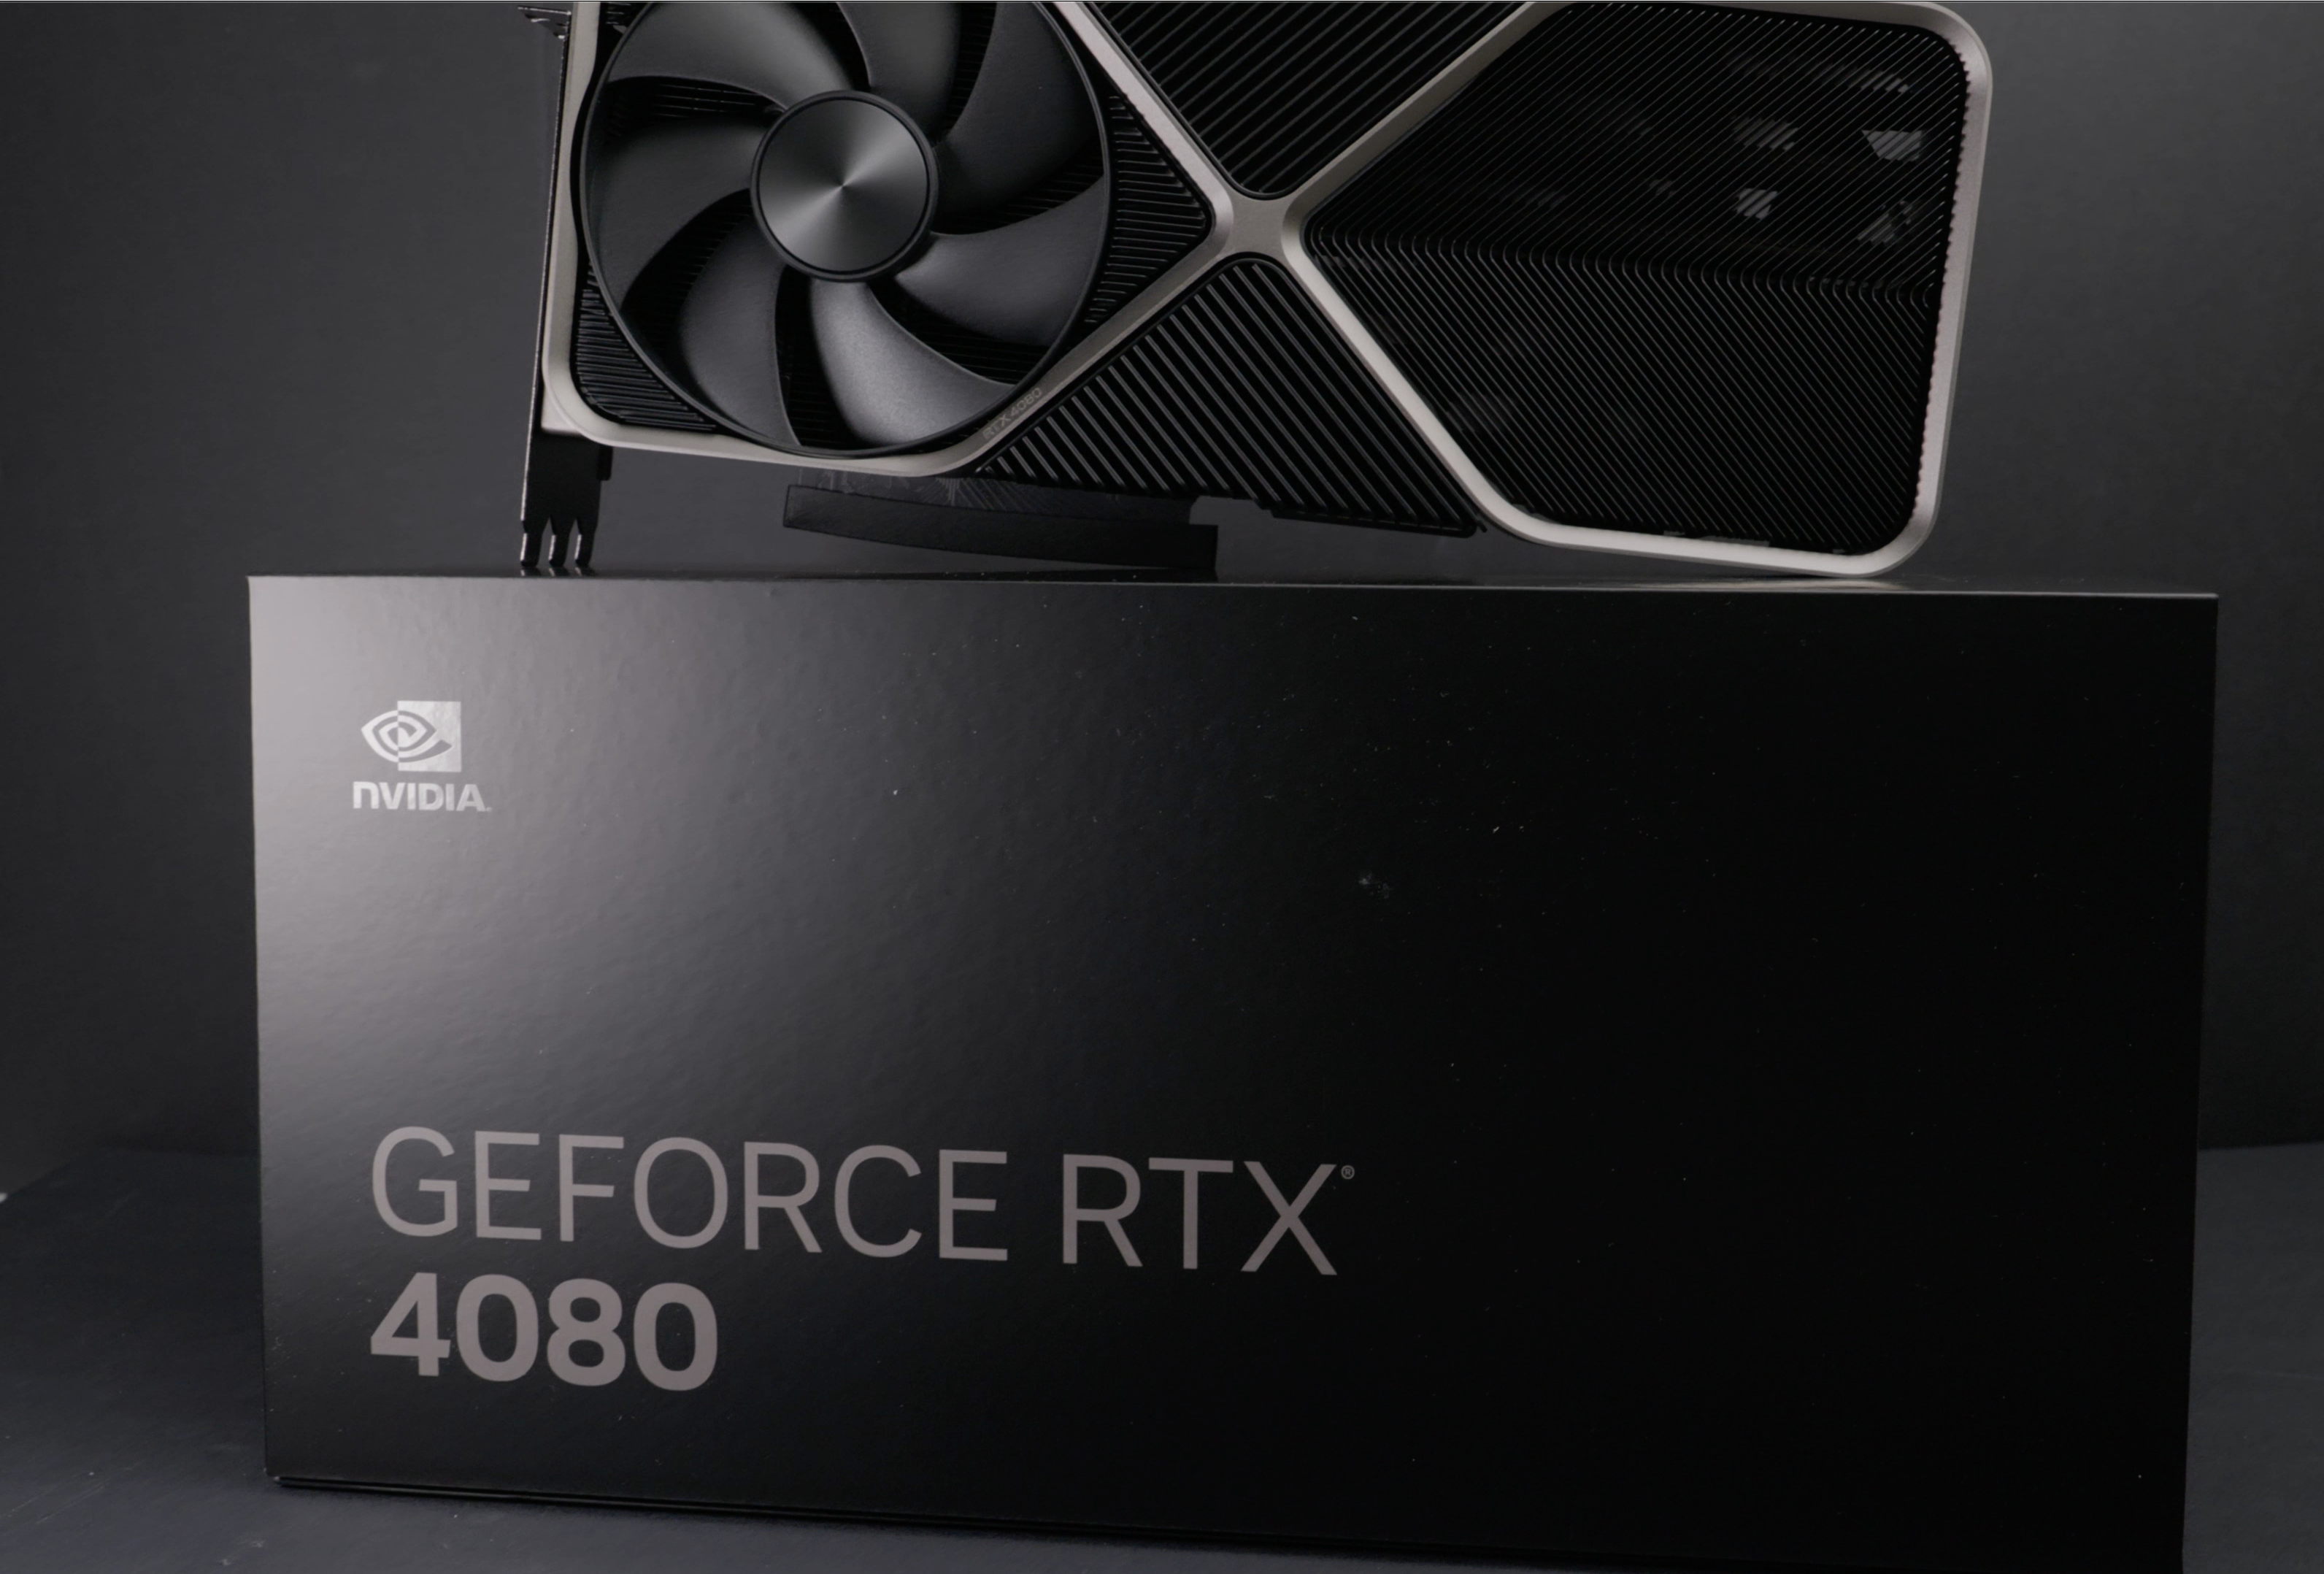 Where to buy Nvidia’s RTX GPU - The Verge